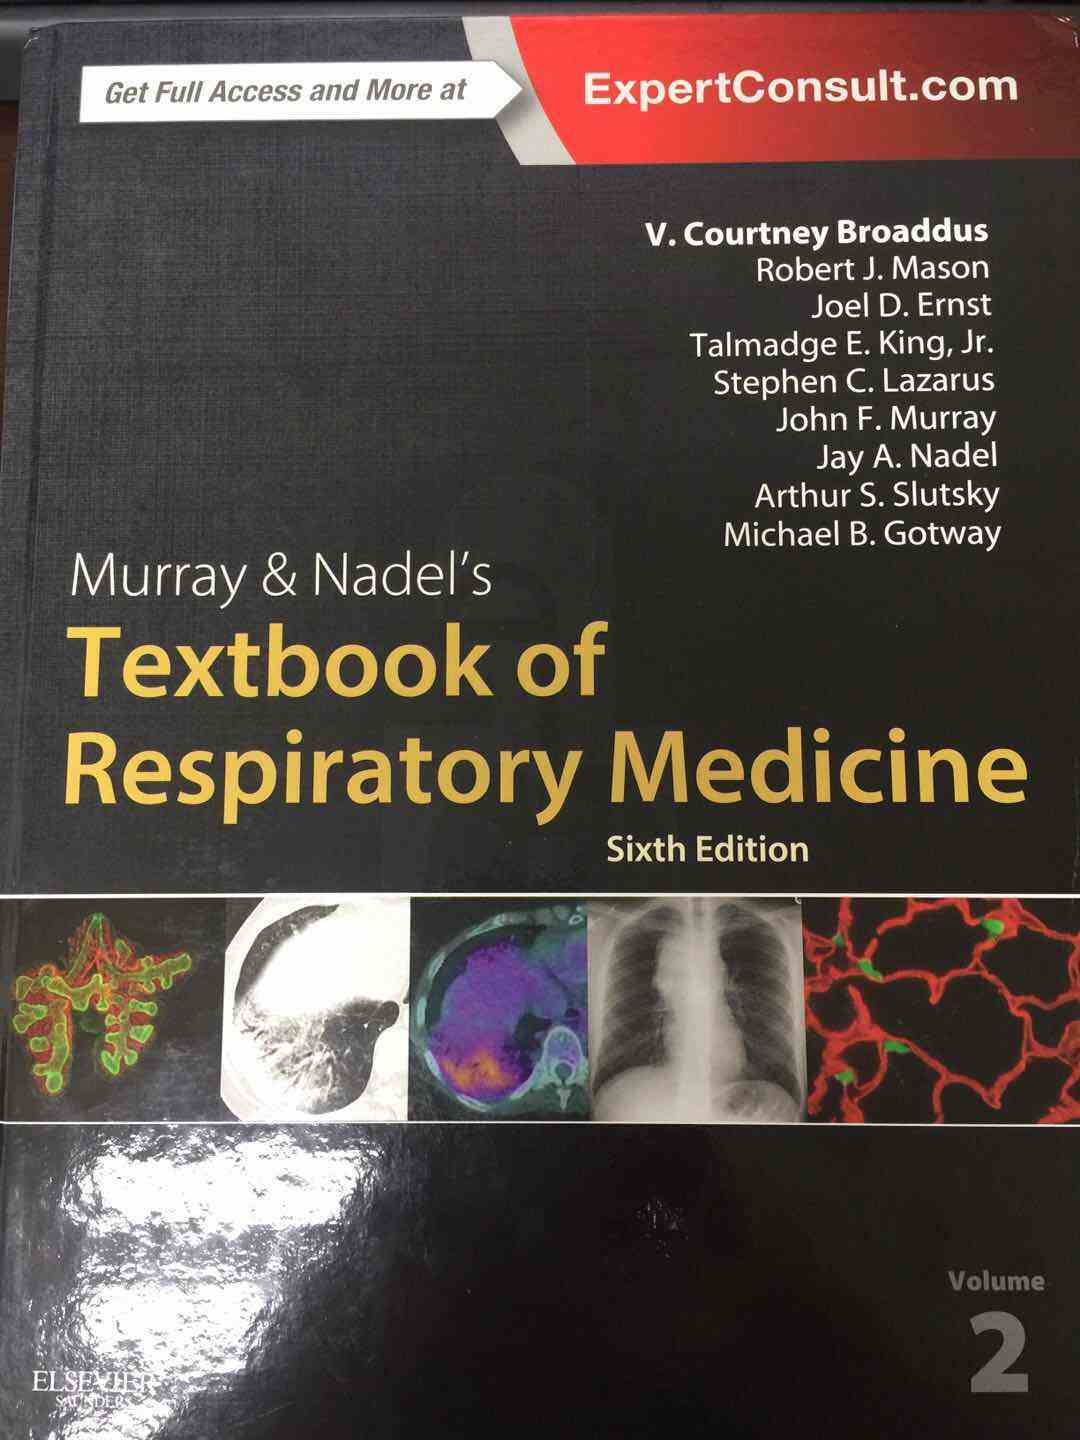  《Textbook of Respiratory Medicine》